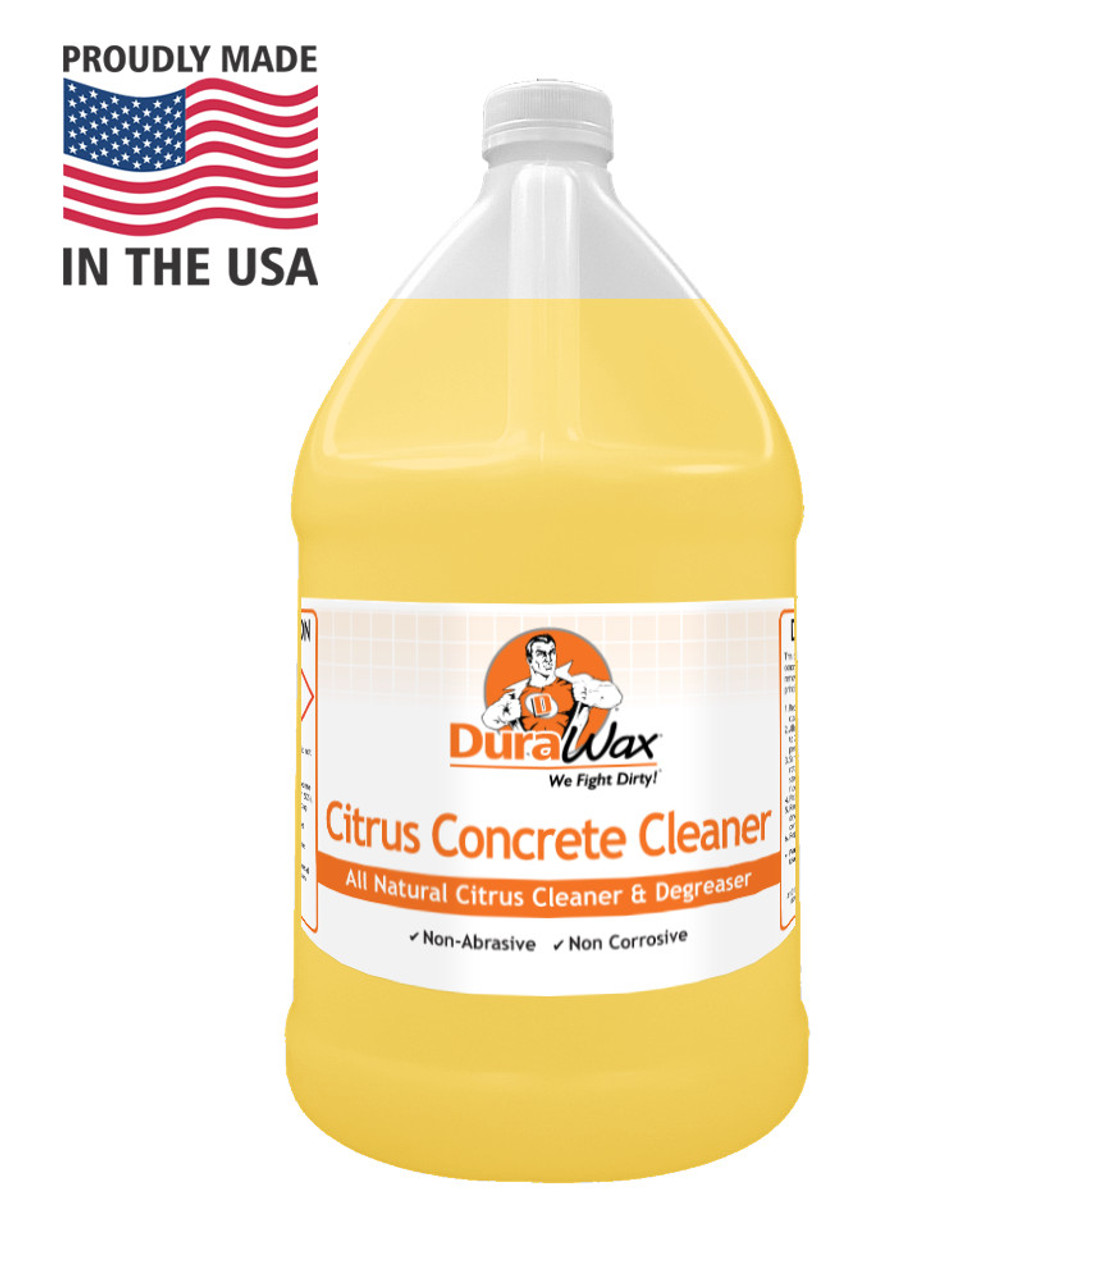 Citrus Concrete Cleaner quickly dissolves oily buildup and black tire marks.